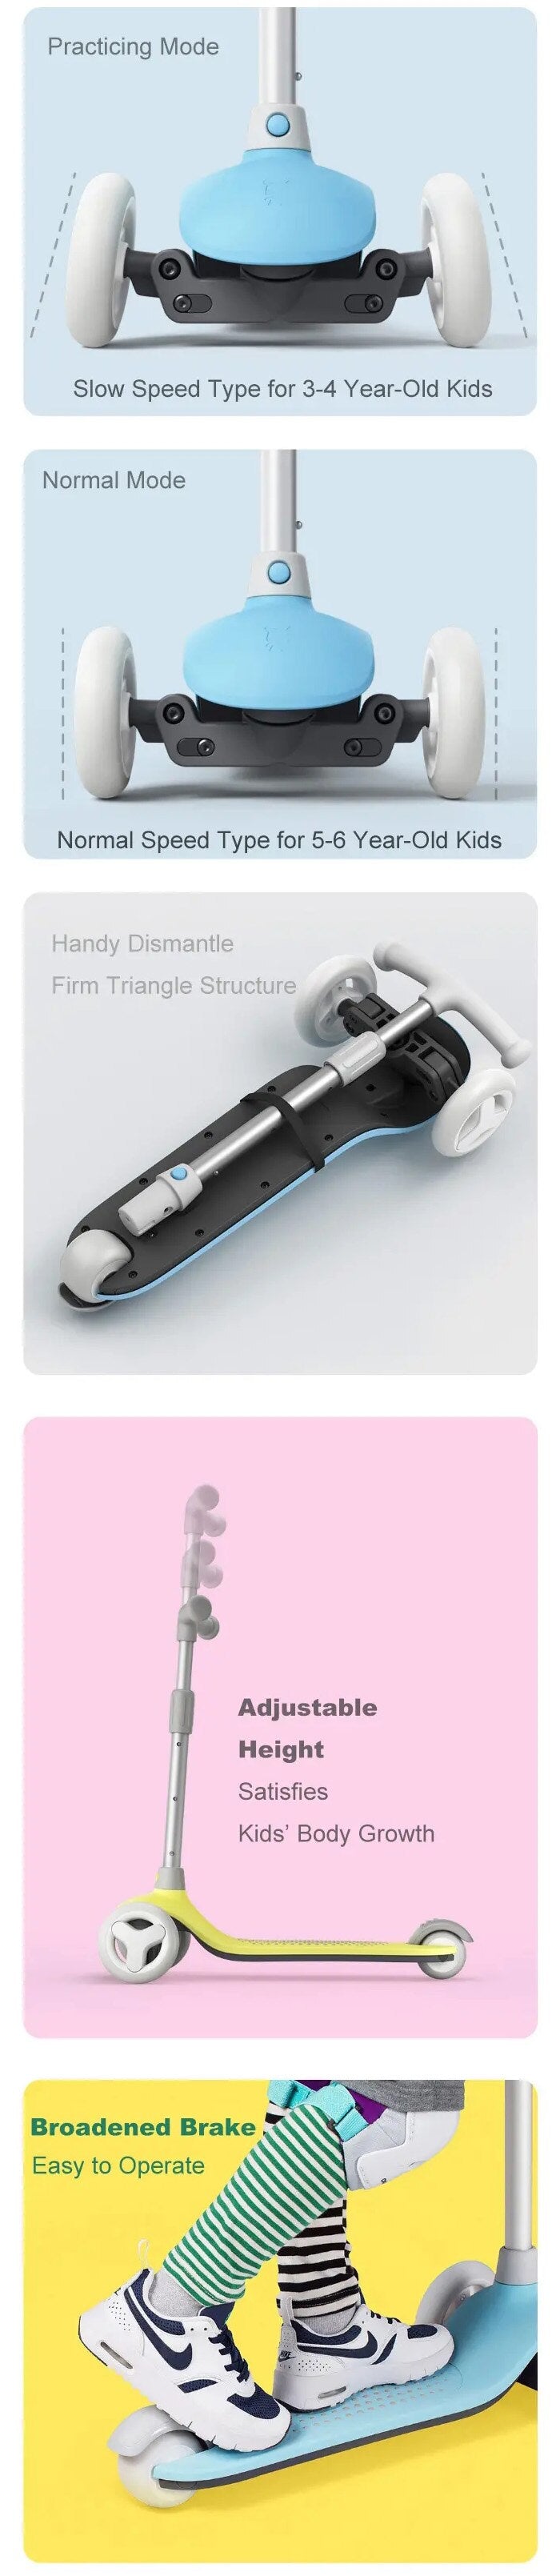 Xiaomi mitu scooter baby kick scooter glider new design